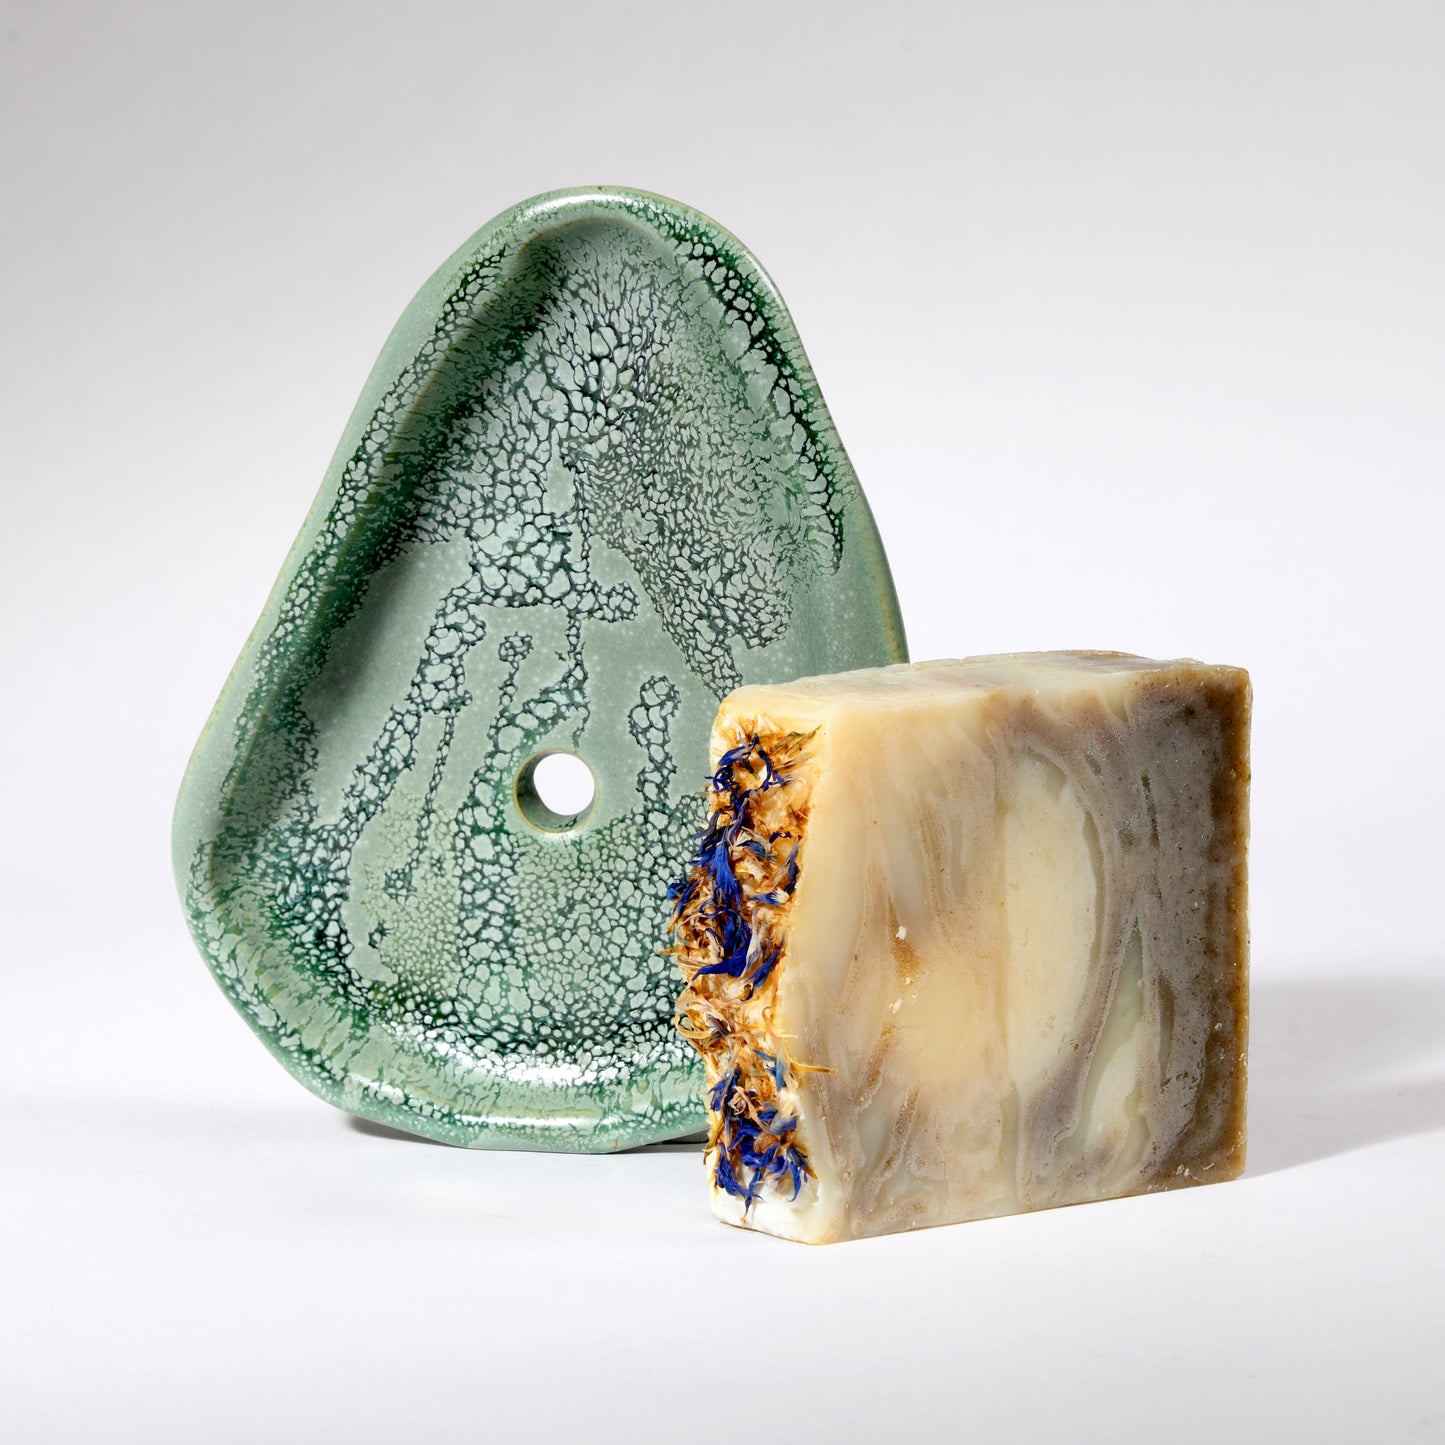 Handmade soap dish with drain hole in a beautiful sea foam glaze